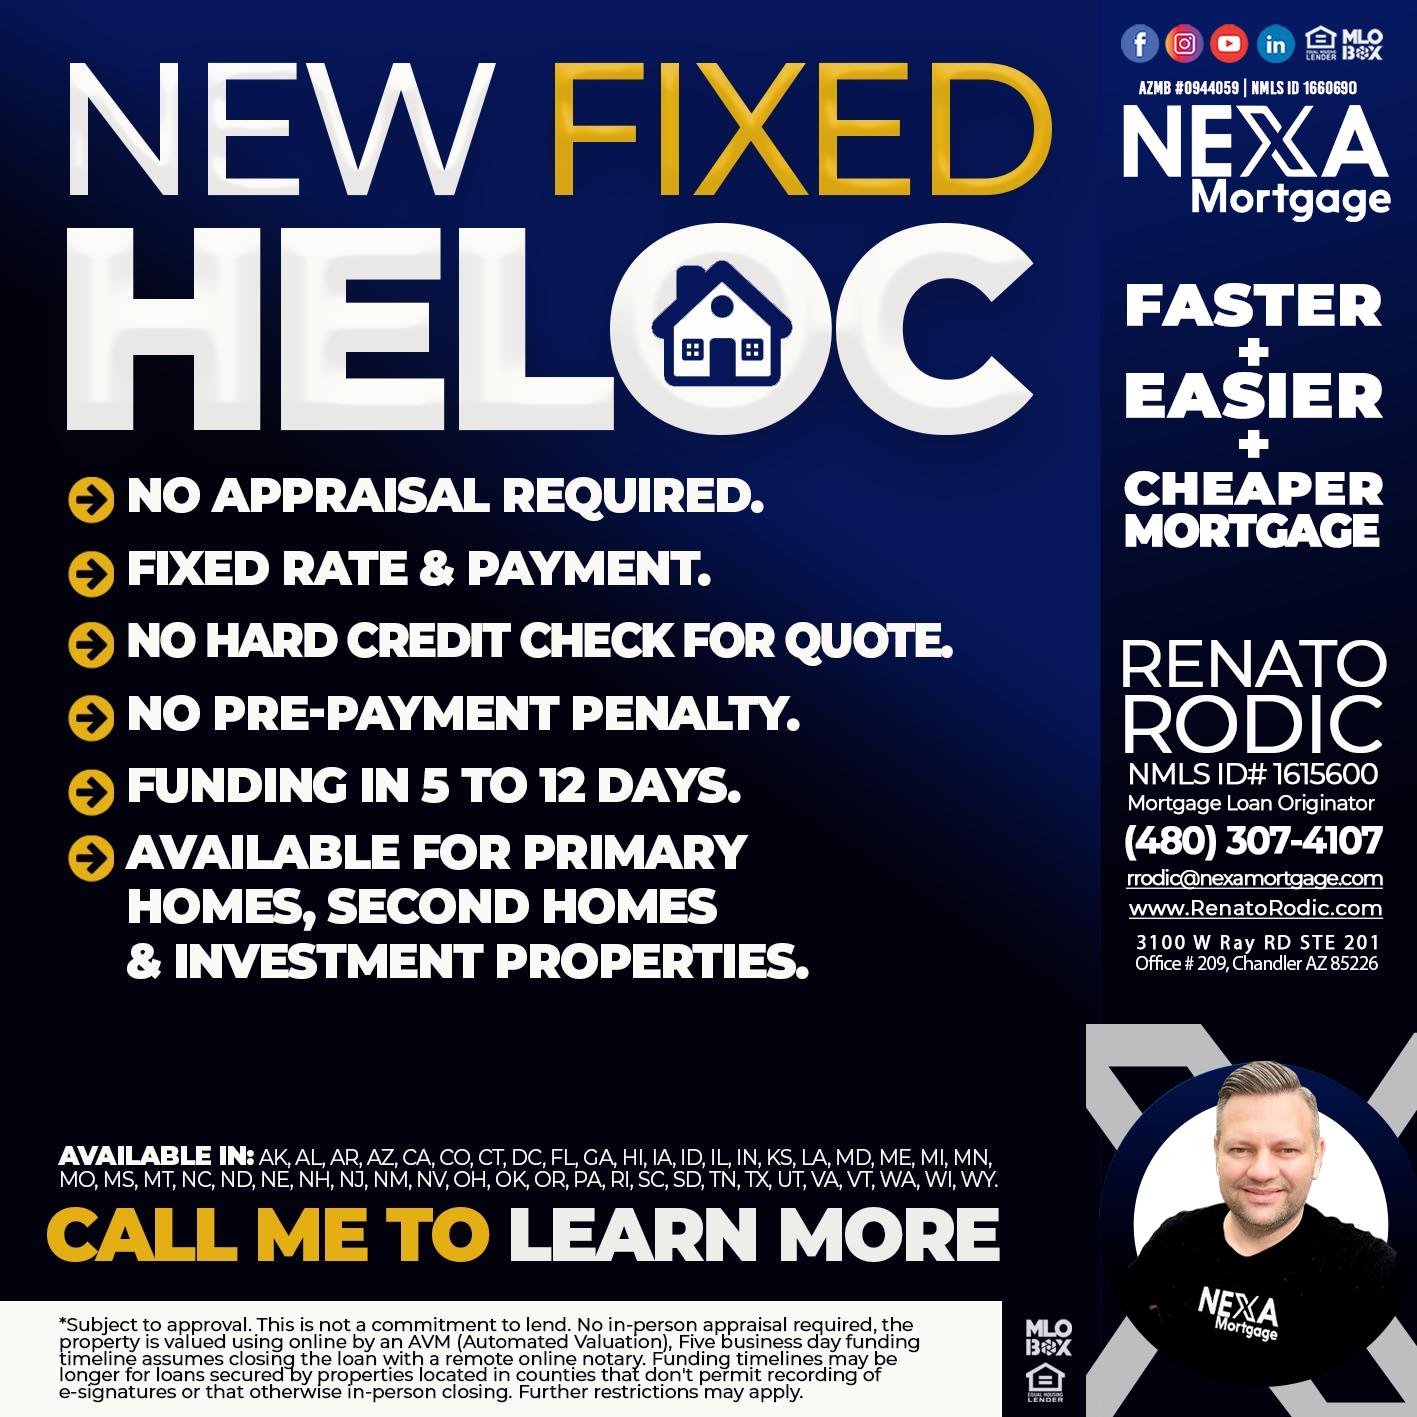 NEW NEXA HELOC - Renato Rodic -Mortgage Loan Originator